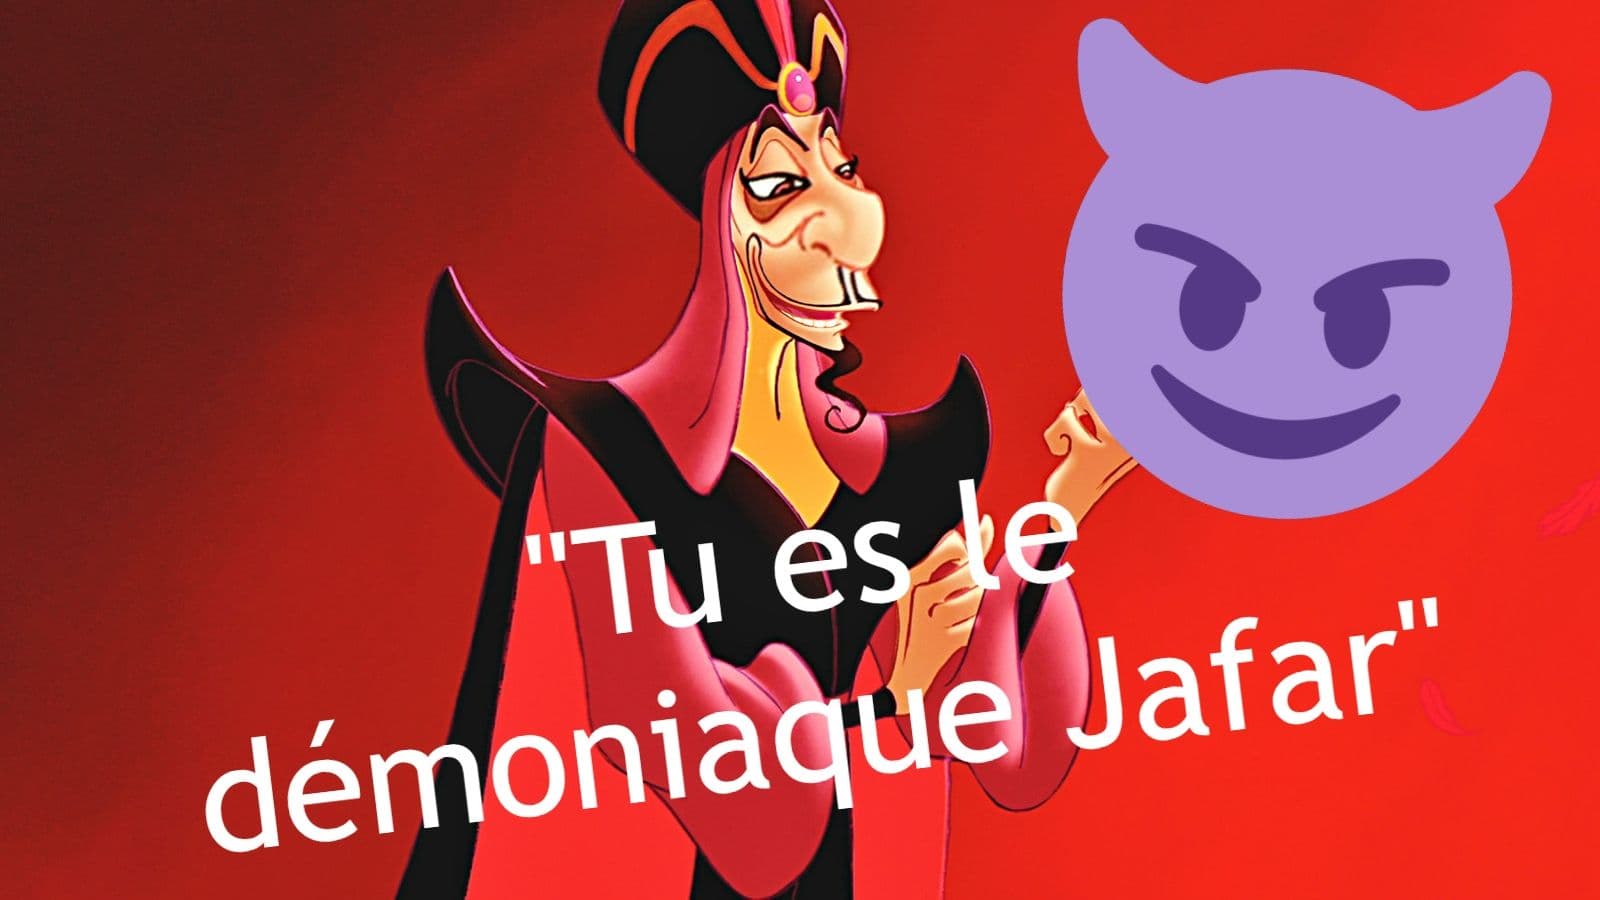 Perso Jafar Aladdin.jpg